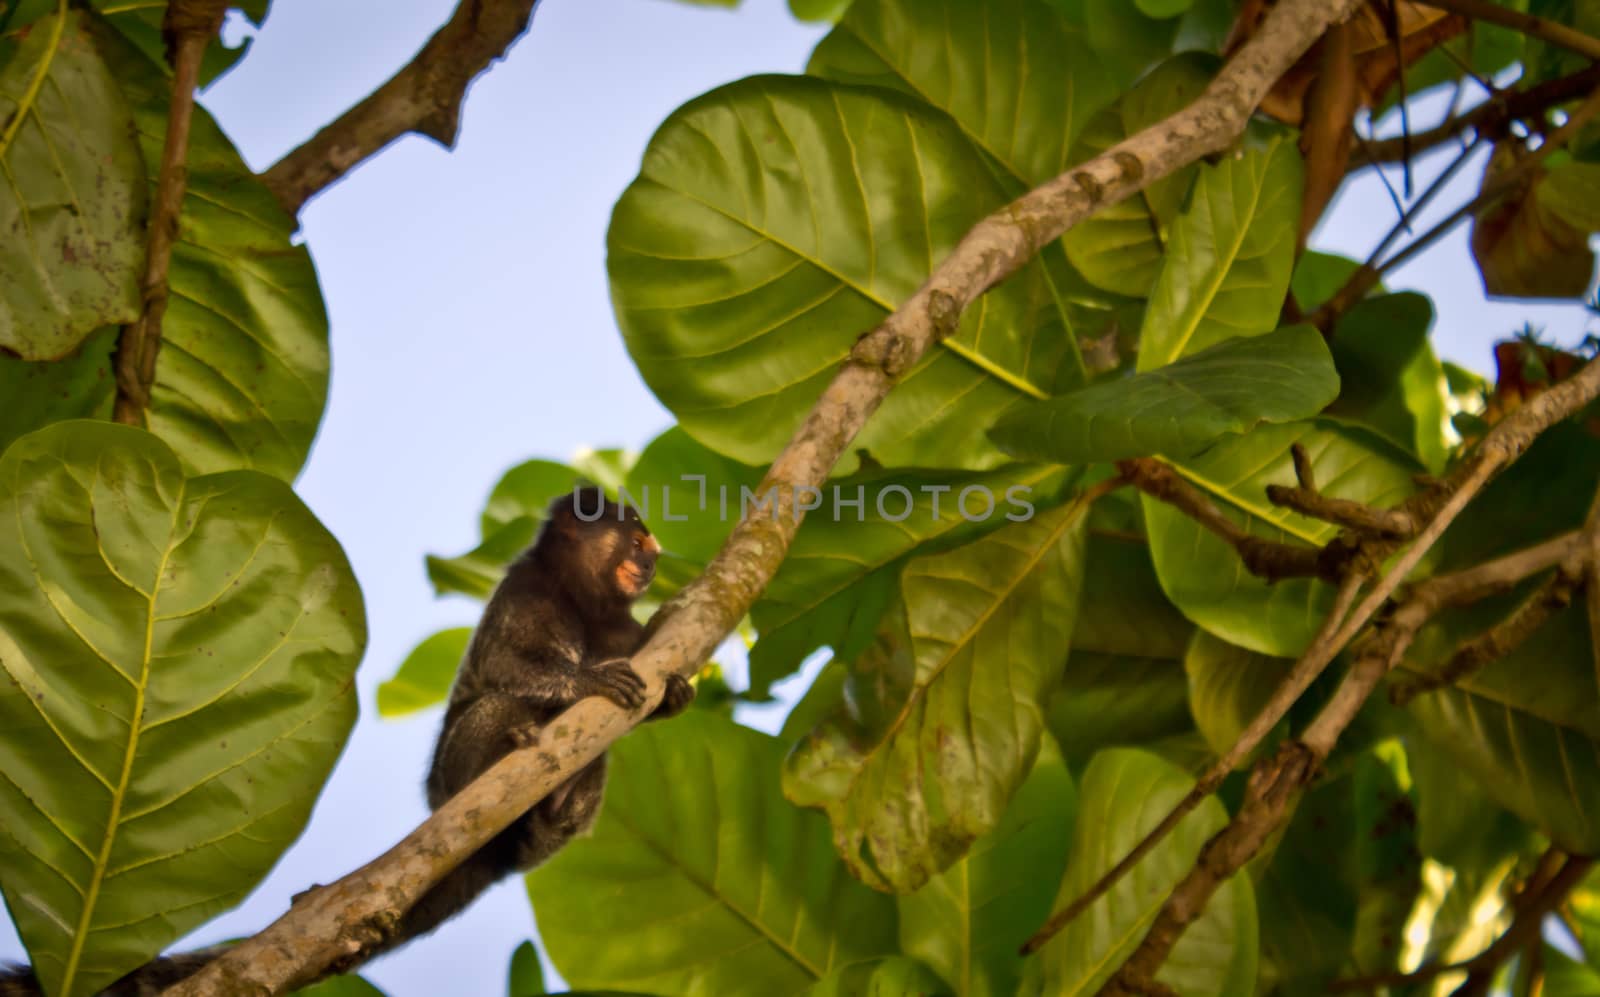 Monkey resting on a tree branch